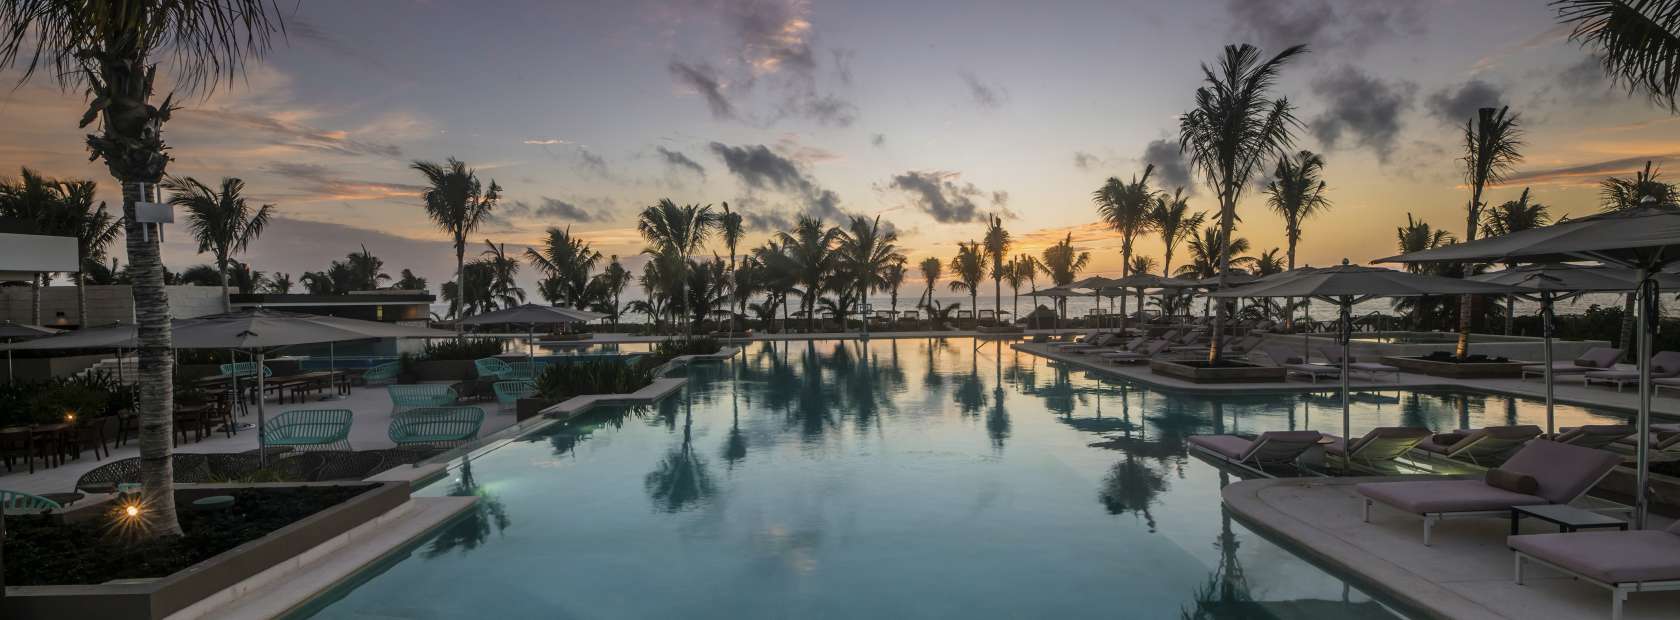 Resort Pool Sunset Reflection